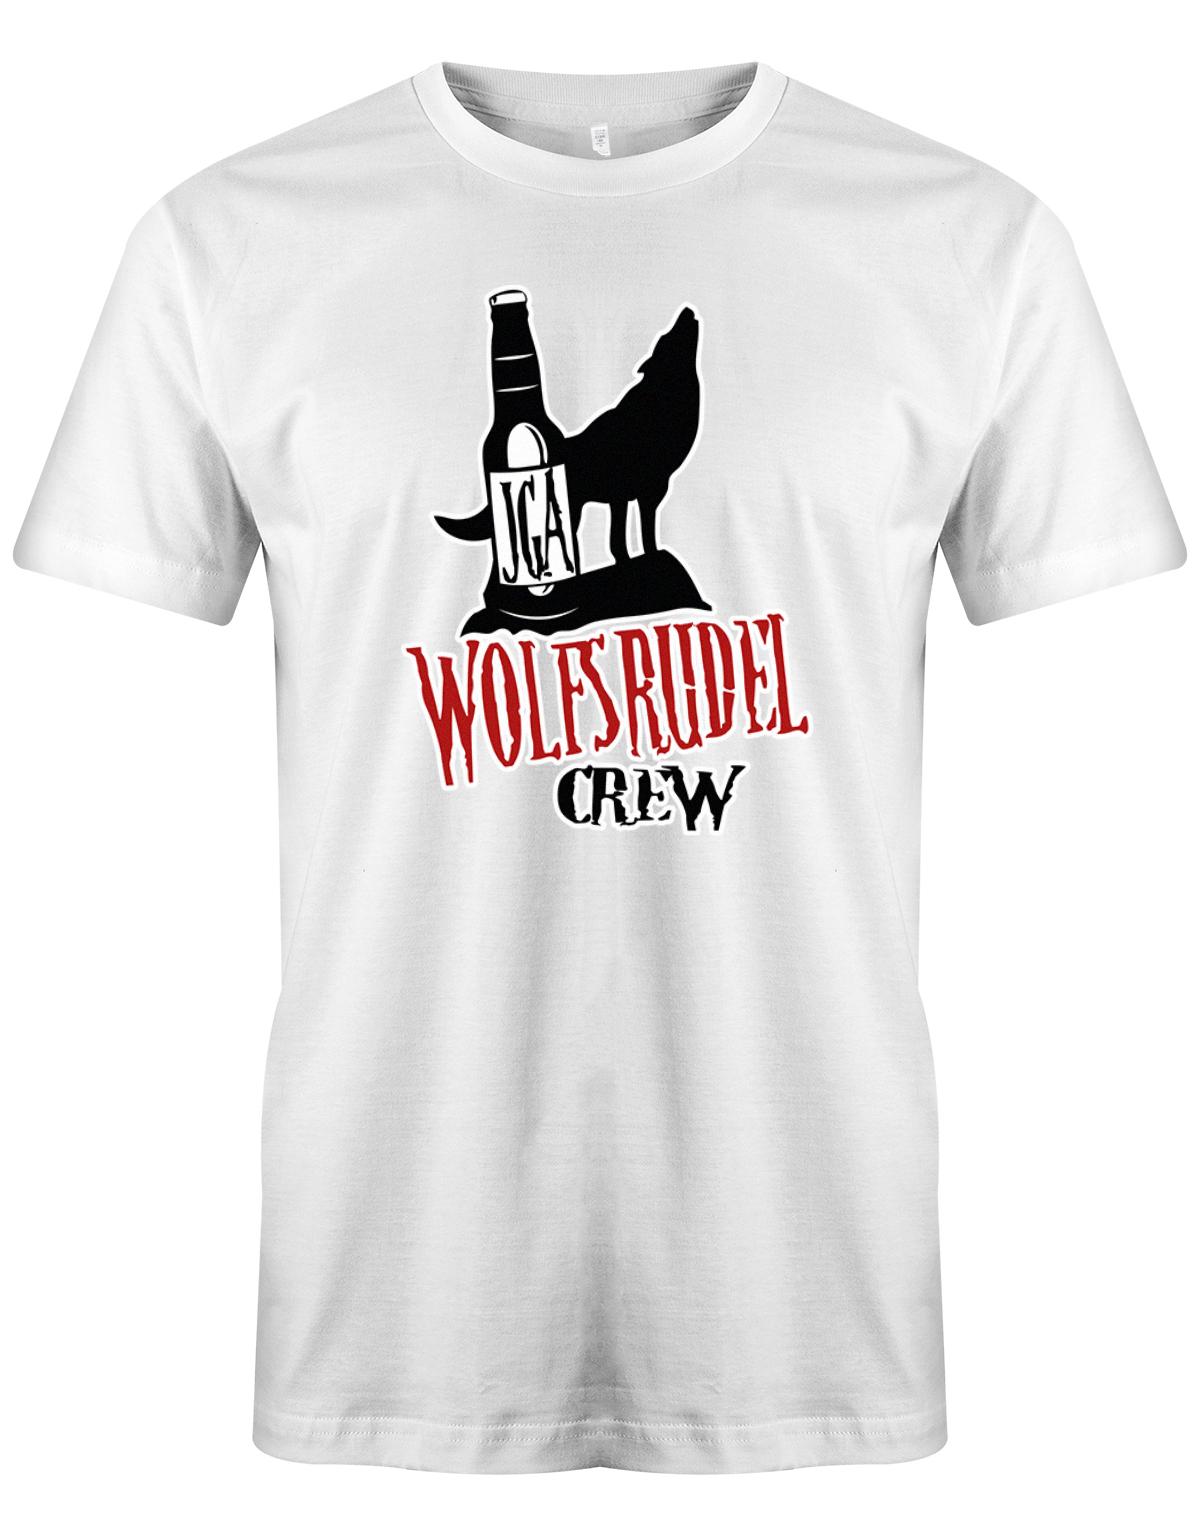 Wolsrudel-Crew-Herren-Shirt-Weiss